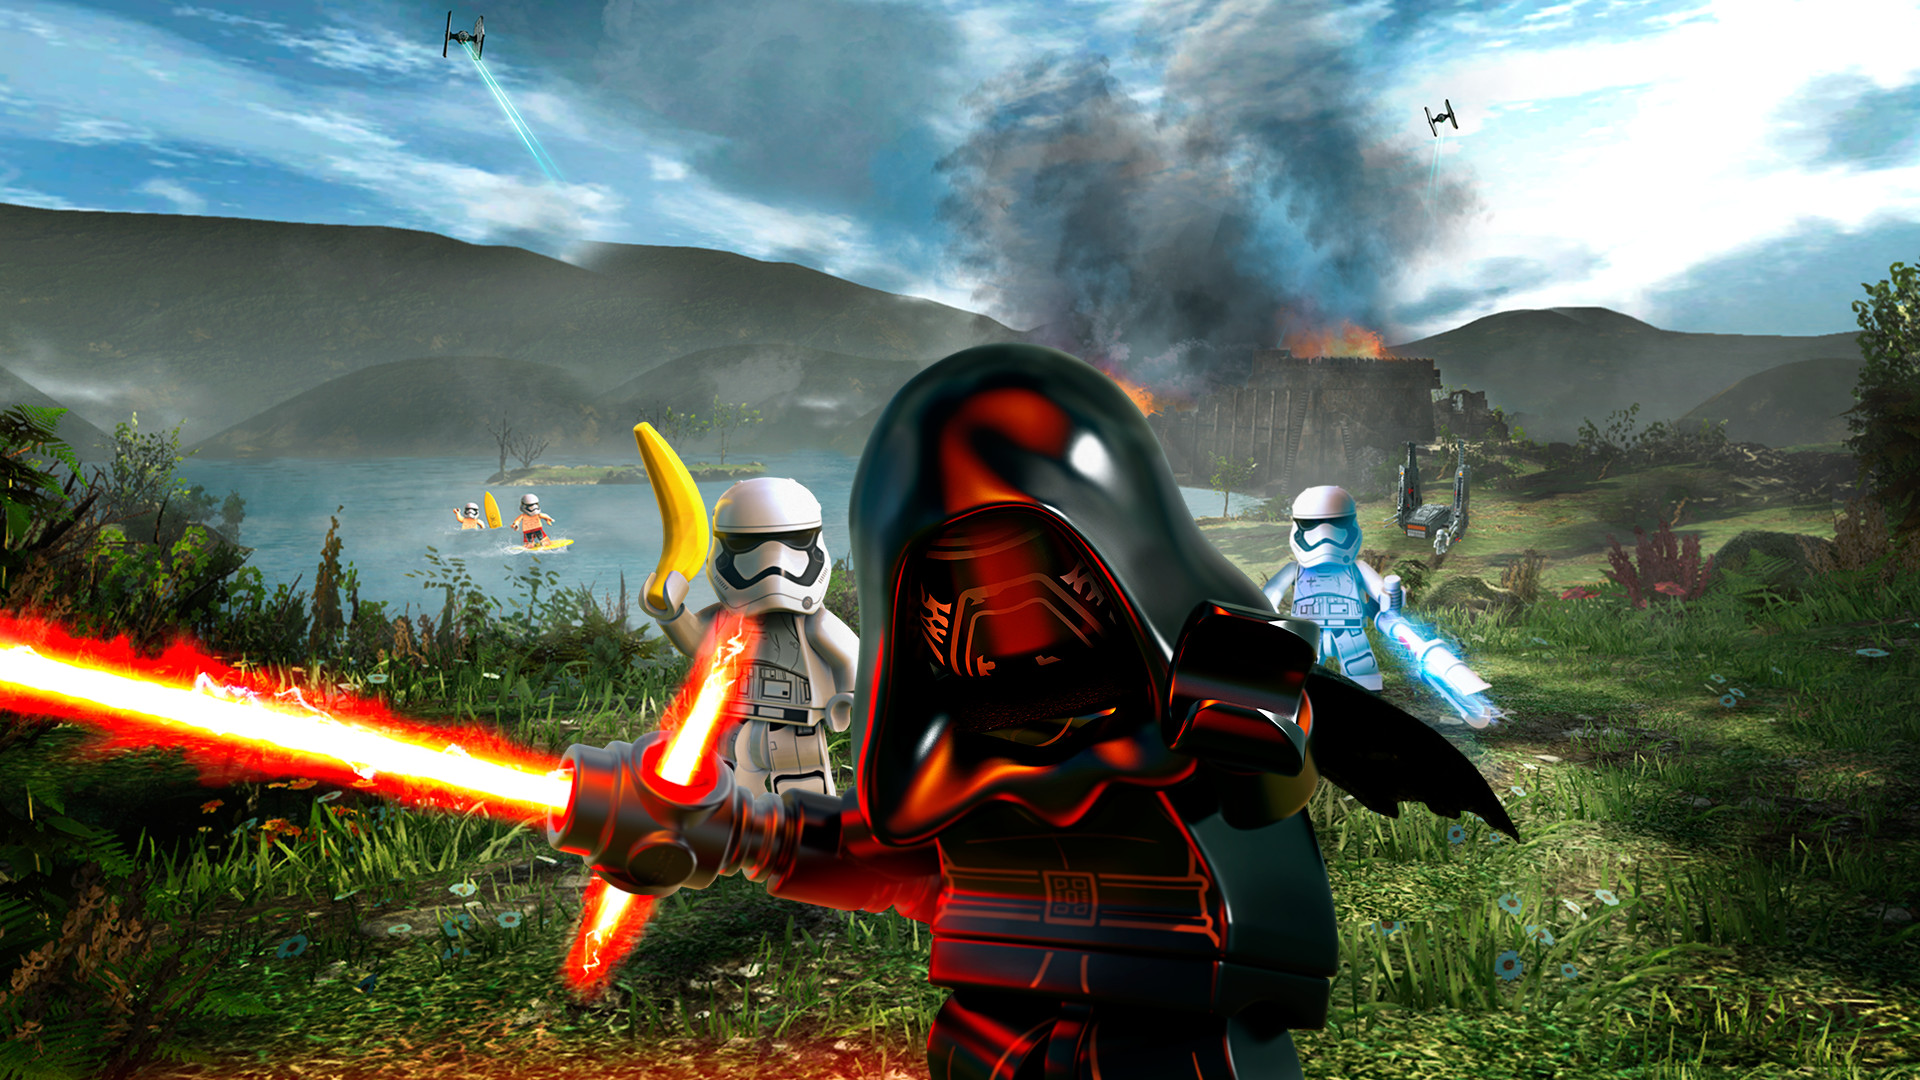 [$ 2.25] LEGO Star Wars: The Force Awakens - First Order Siege of Takodana Level Pack DLC Steam CD Key